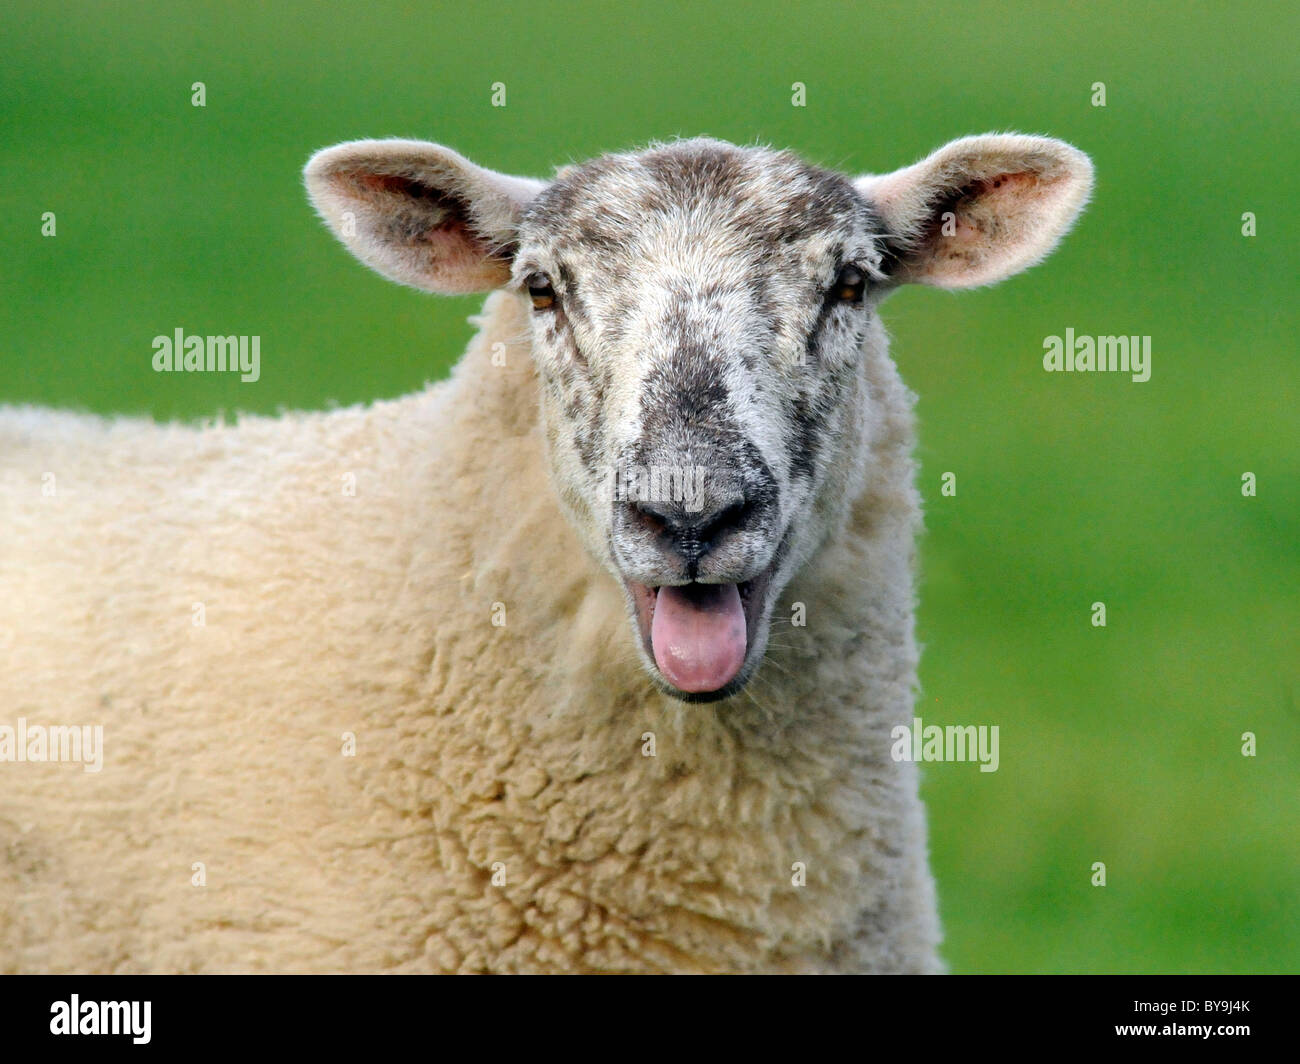 A sheep baaing making a baah sound. Stock Photo